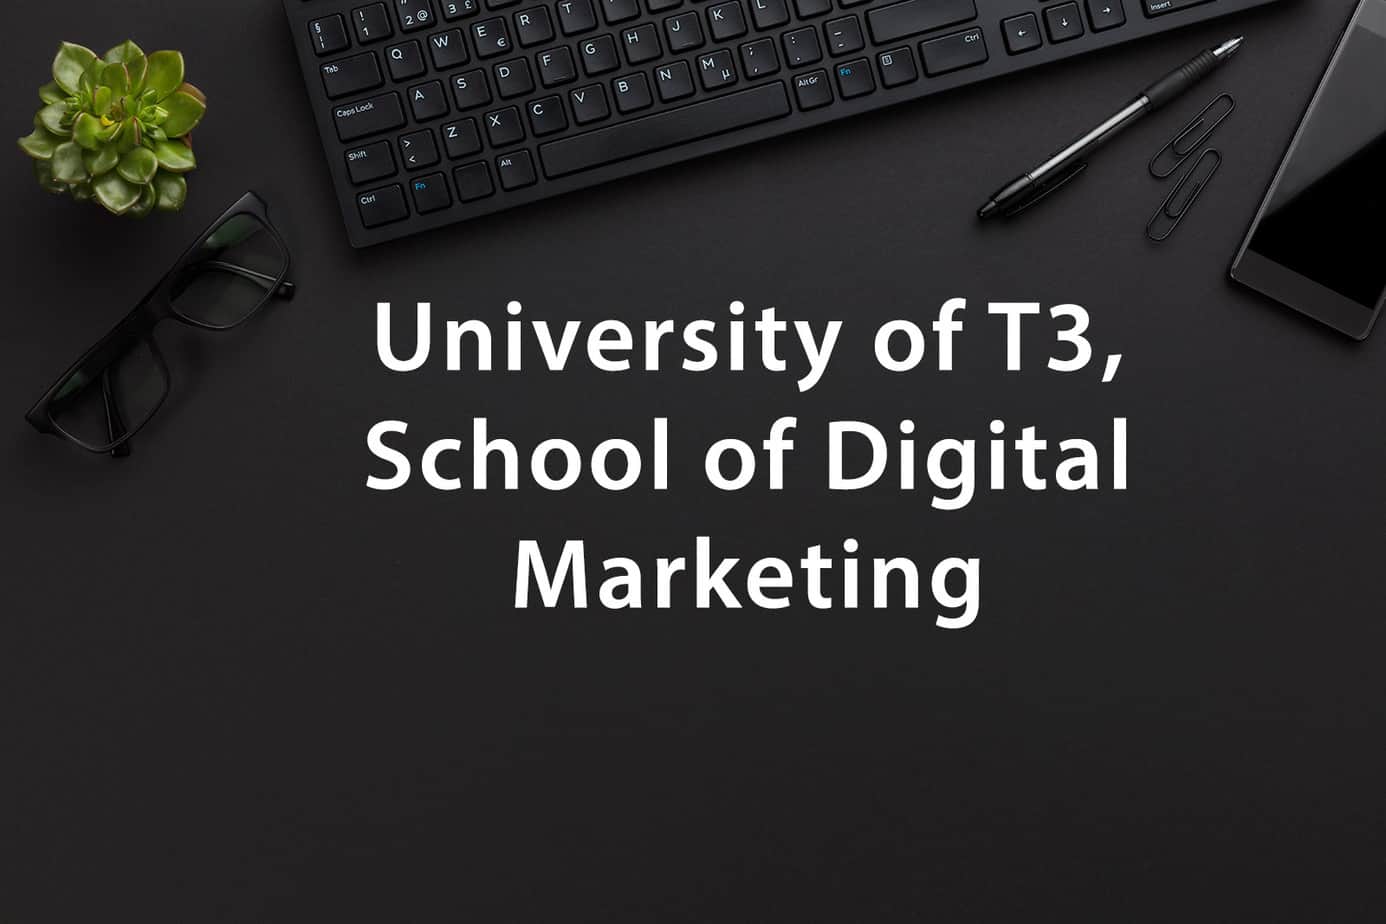 School of digital marketing